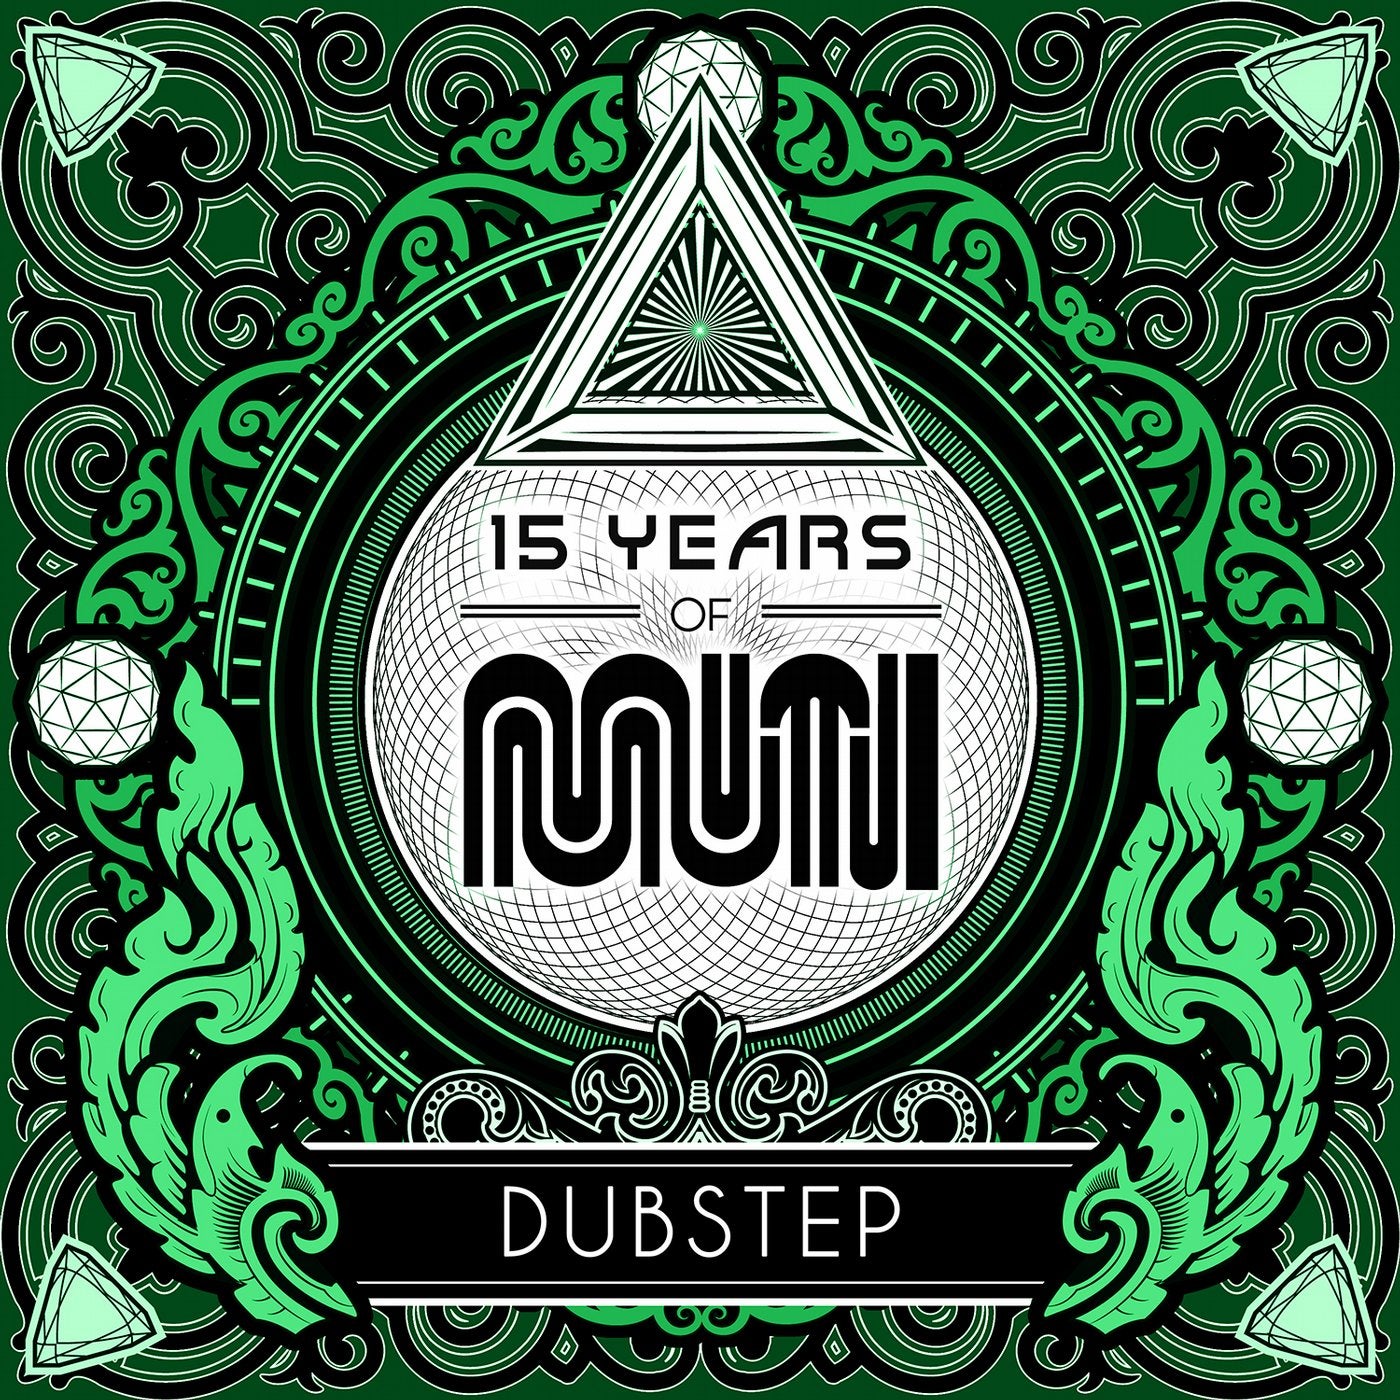 15 Years Of Muti - Dubstep